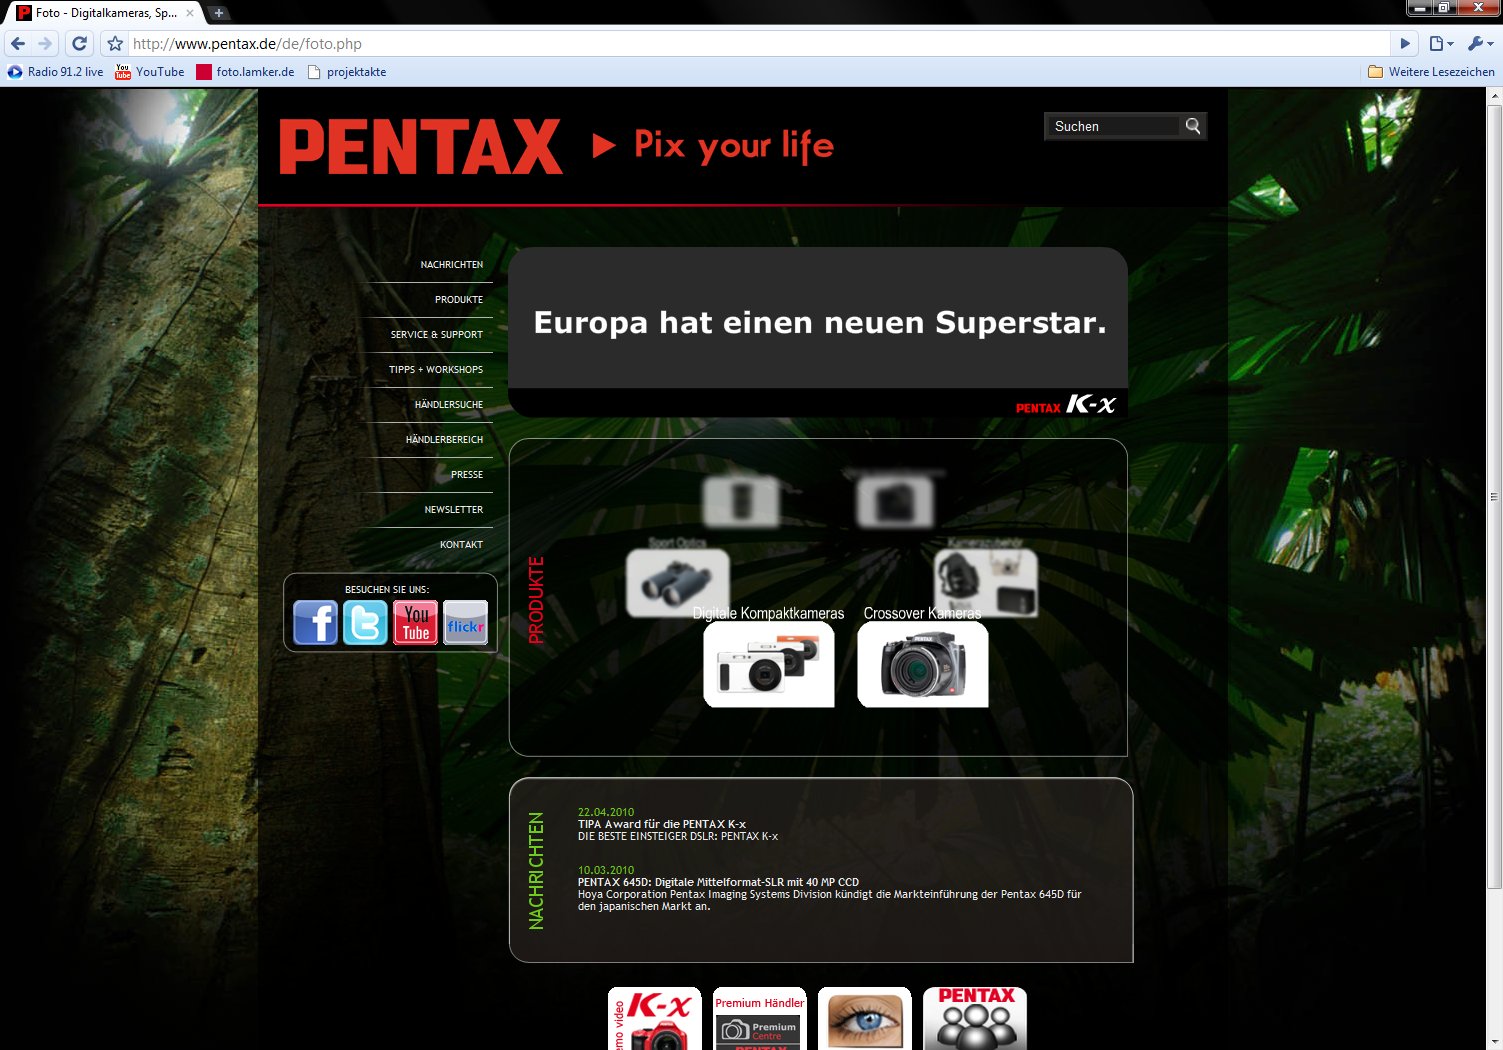 Pentax.de